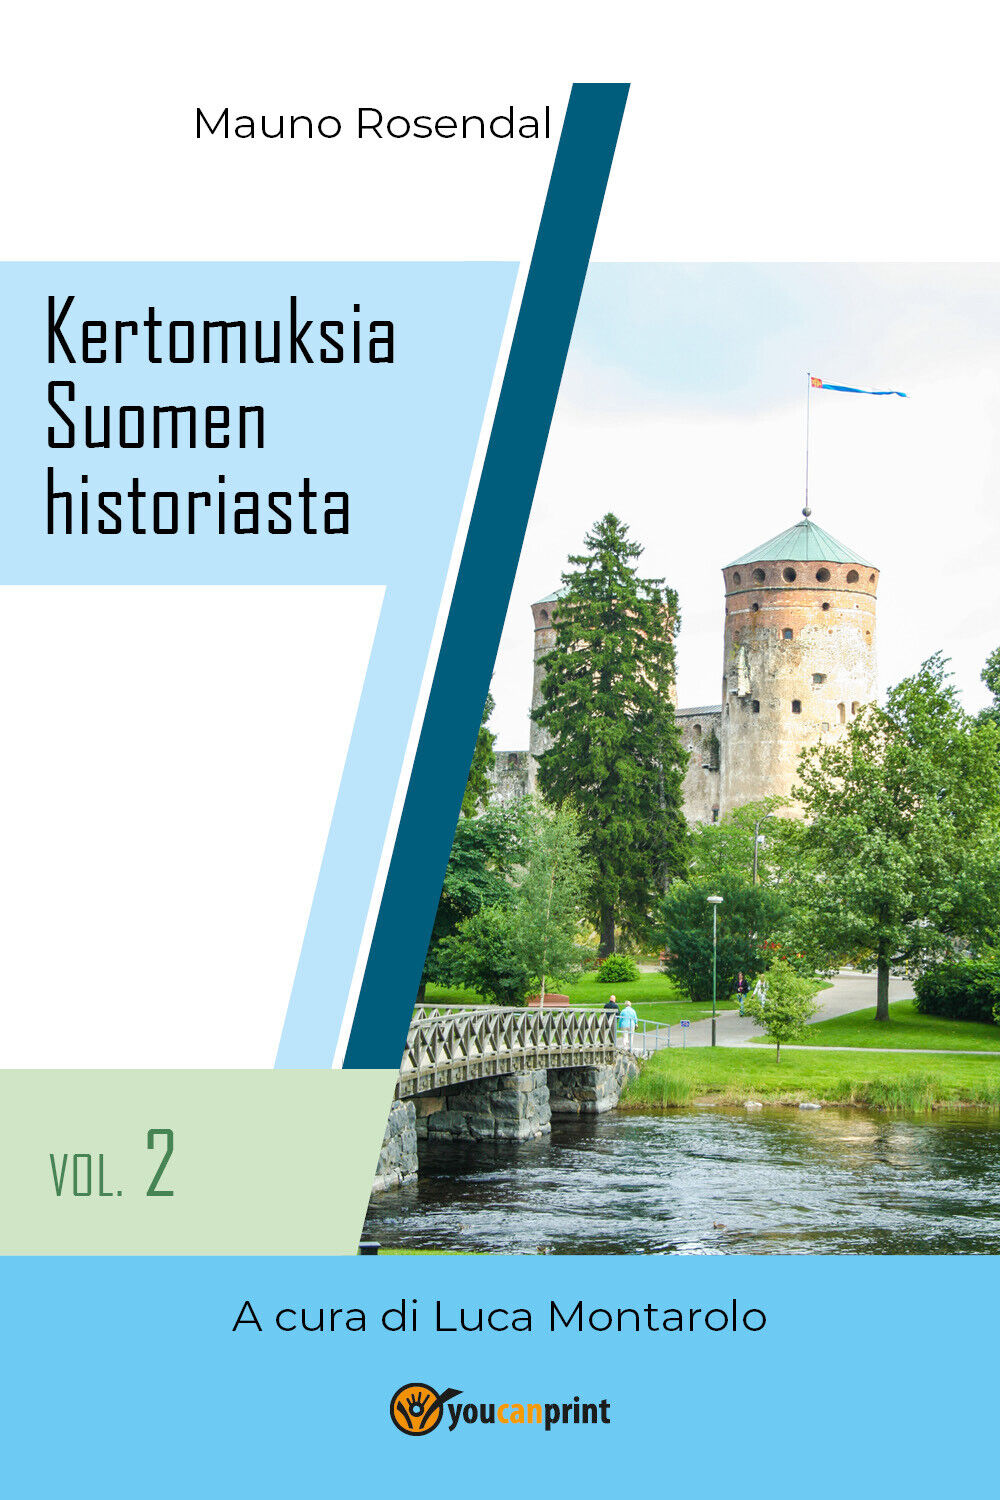 Kertomuksia Suomen historiasta vol. 2  di Mauno Rosendal, L. Montarolo,  2018